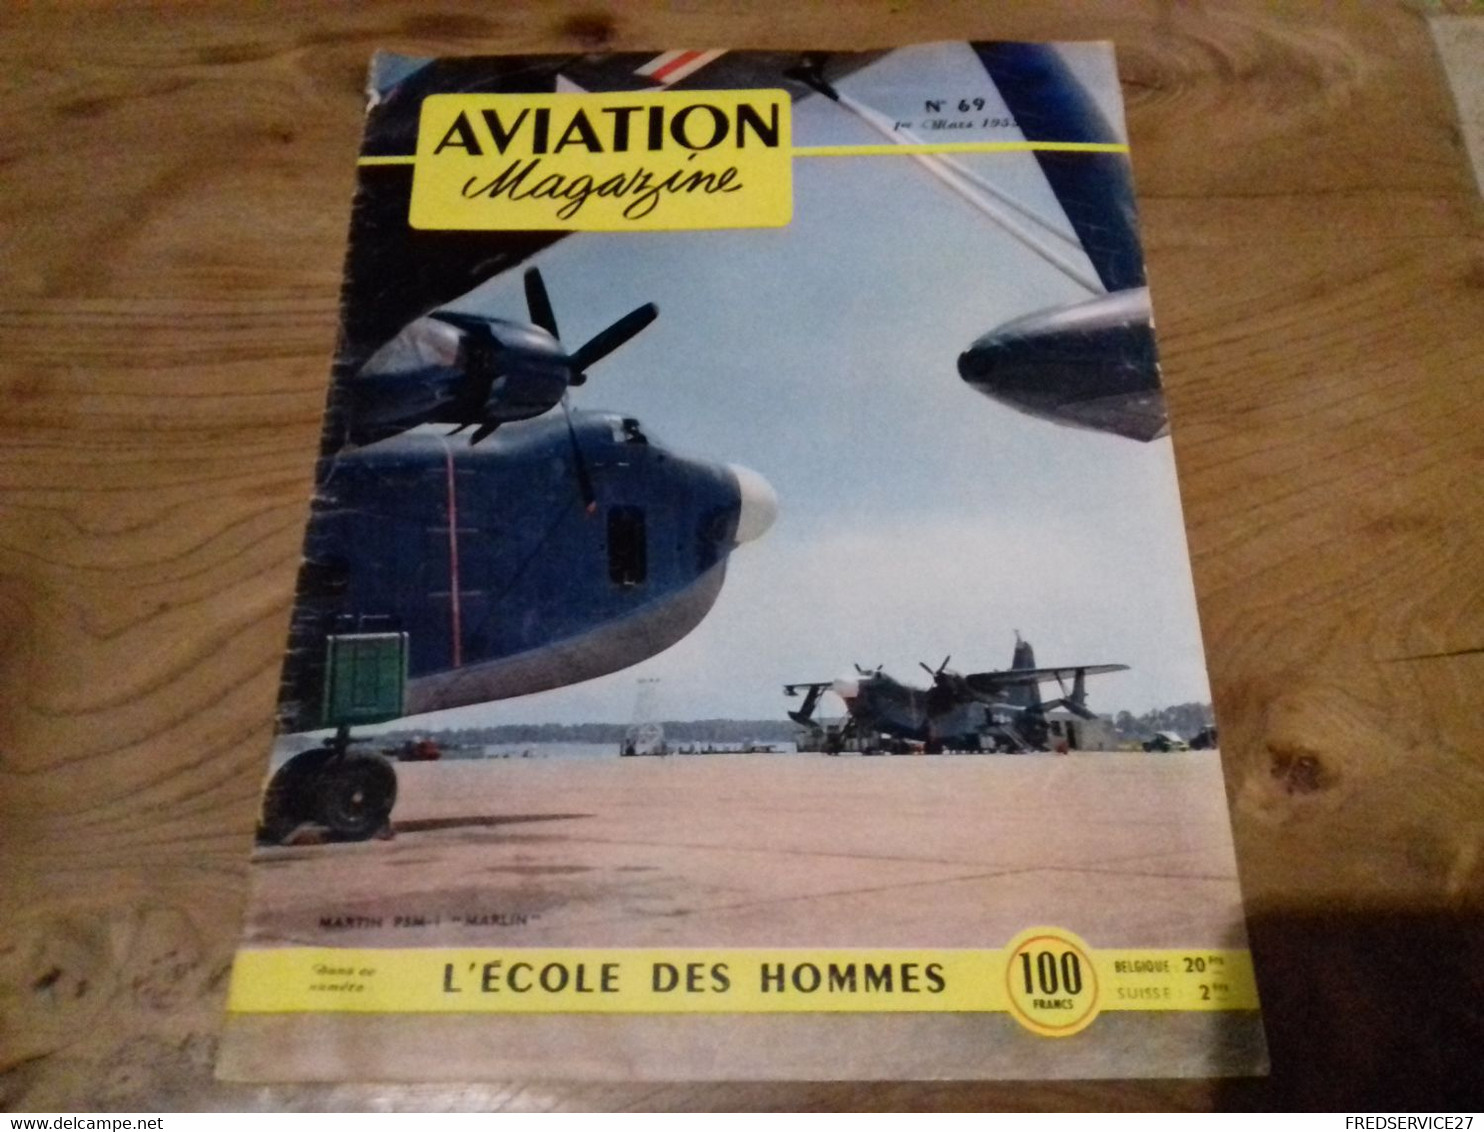 40/ AVIATION MAGAZINE N° 69 1953 LE MARTIN P5M I MARLIN / L ECOLE DES HOMMES - Aviation